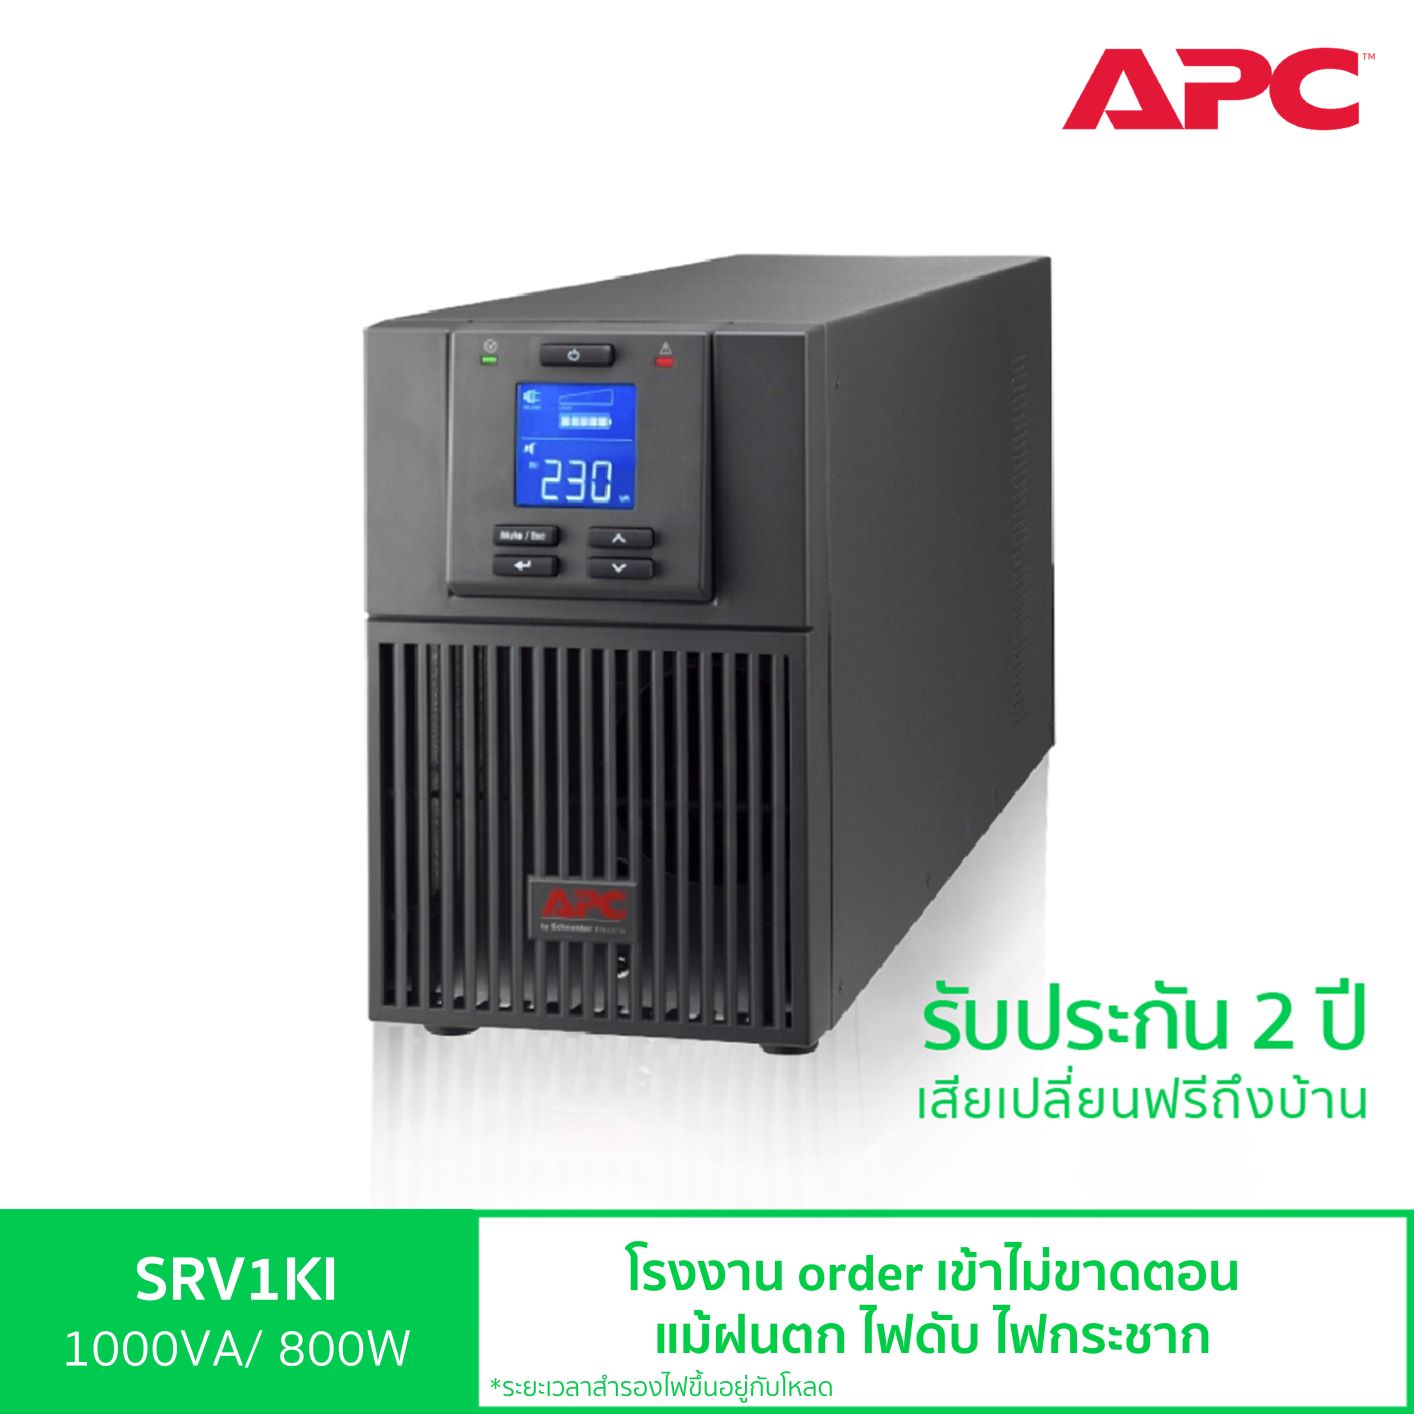 APC Smart EASY UPS 1000VA/800WATT SRV1KI แบบ True Online LCD เครื่องสำรองไฟฟ้าสำหรับอุปกรณ์ควบคุมภายในโรงงาน มีความเสถียรสูง Zero Transfer Time